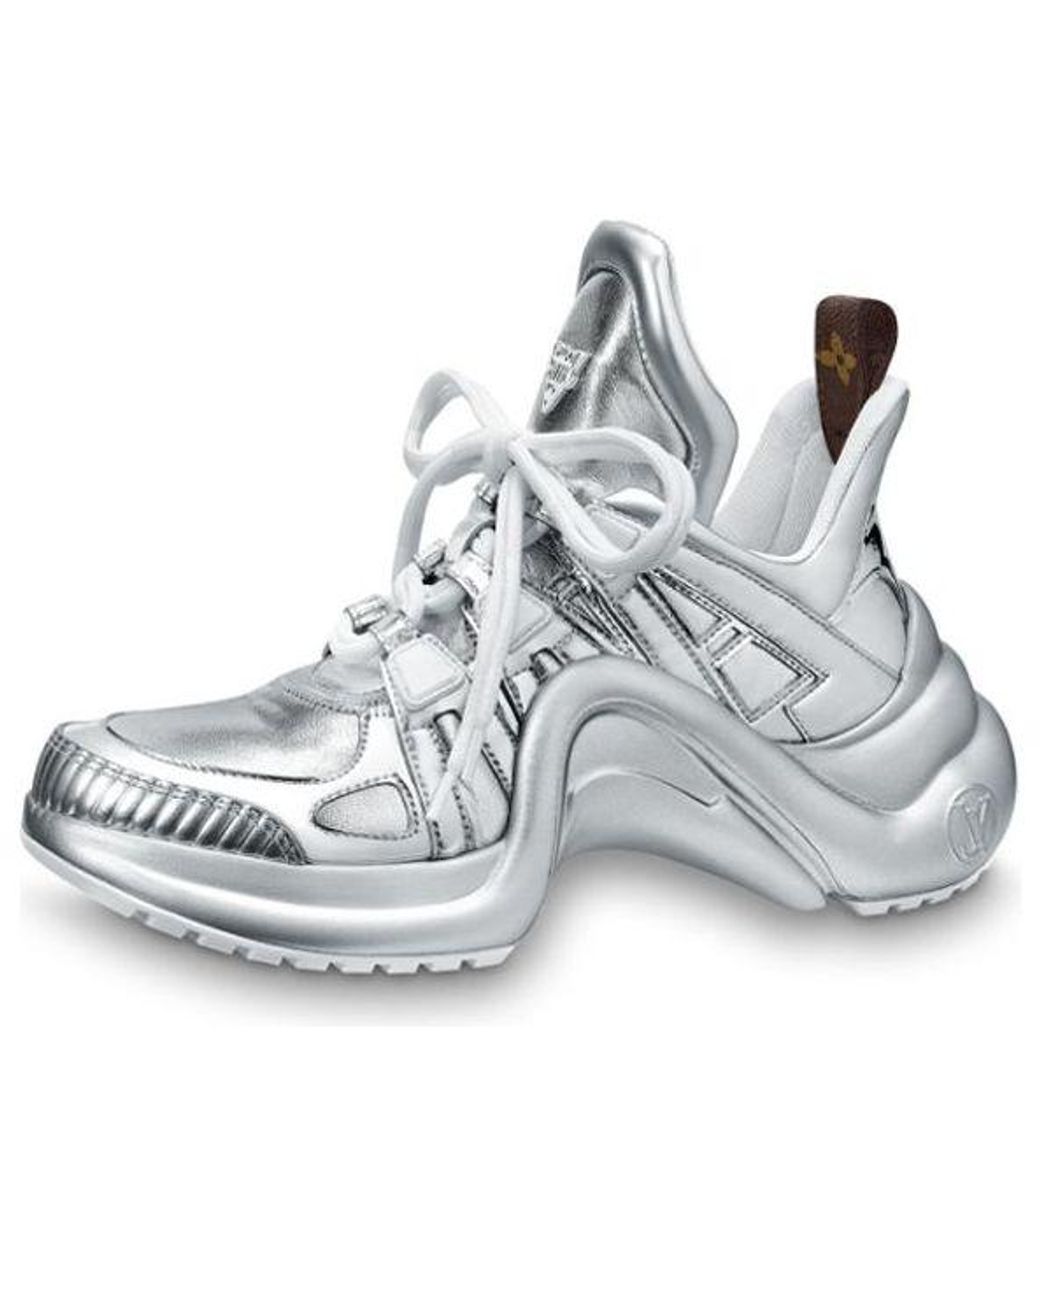 AUTHENTIC Louis Vuitton Metallic Calfskin LV Archlight Sneakers